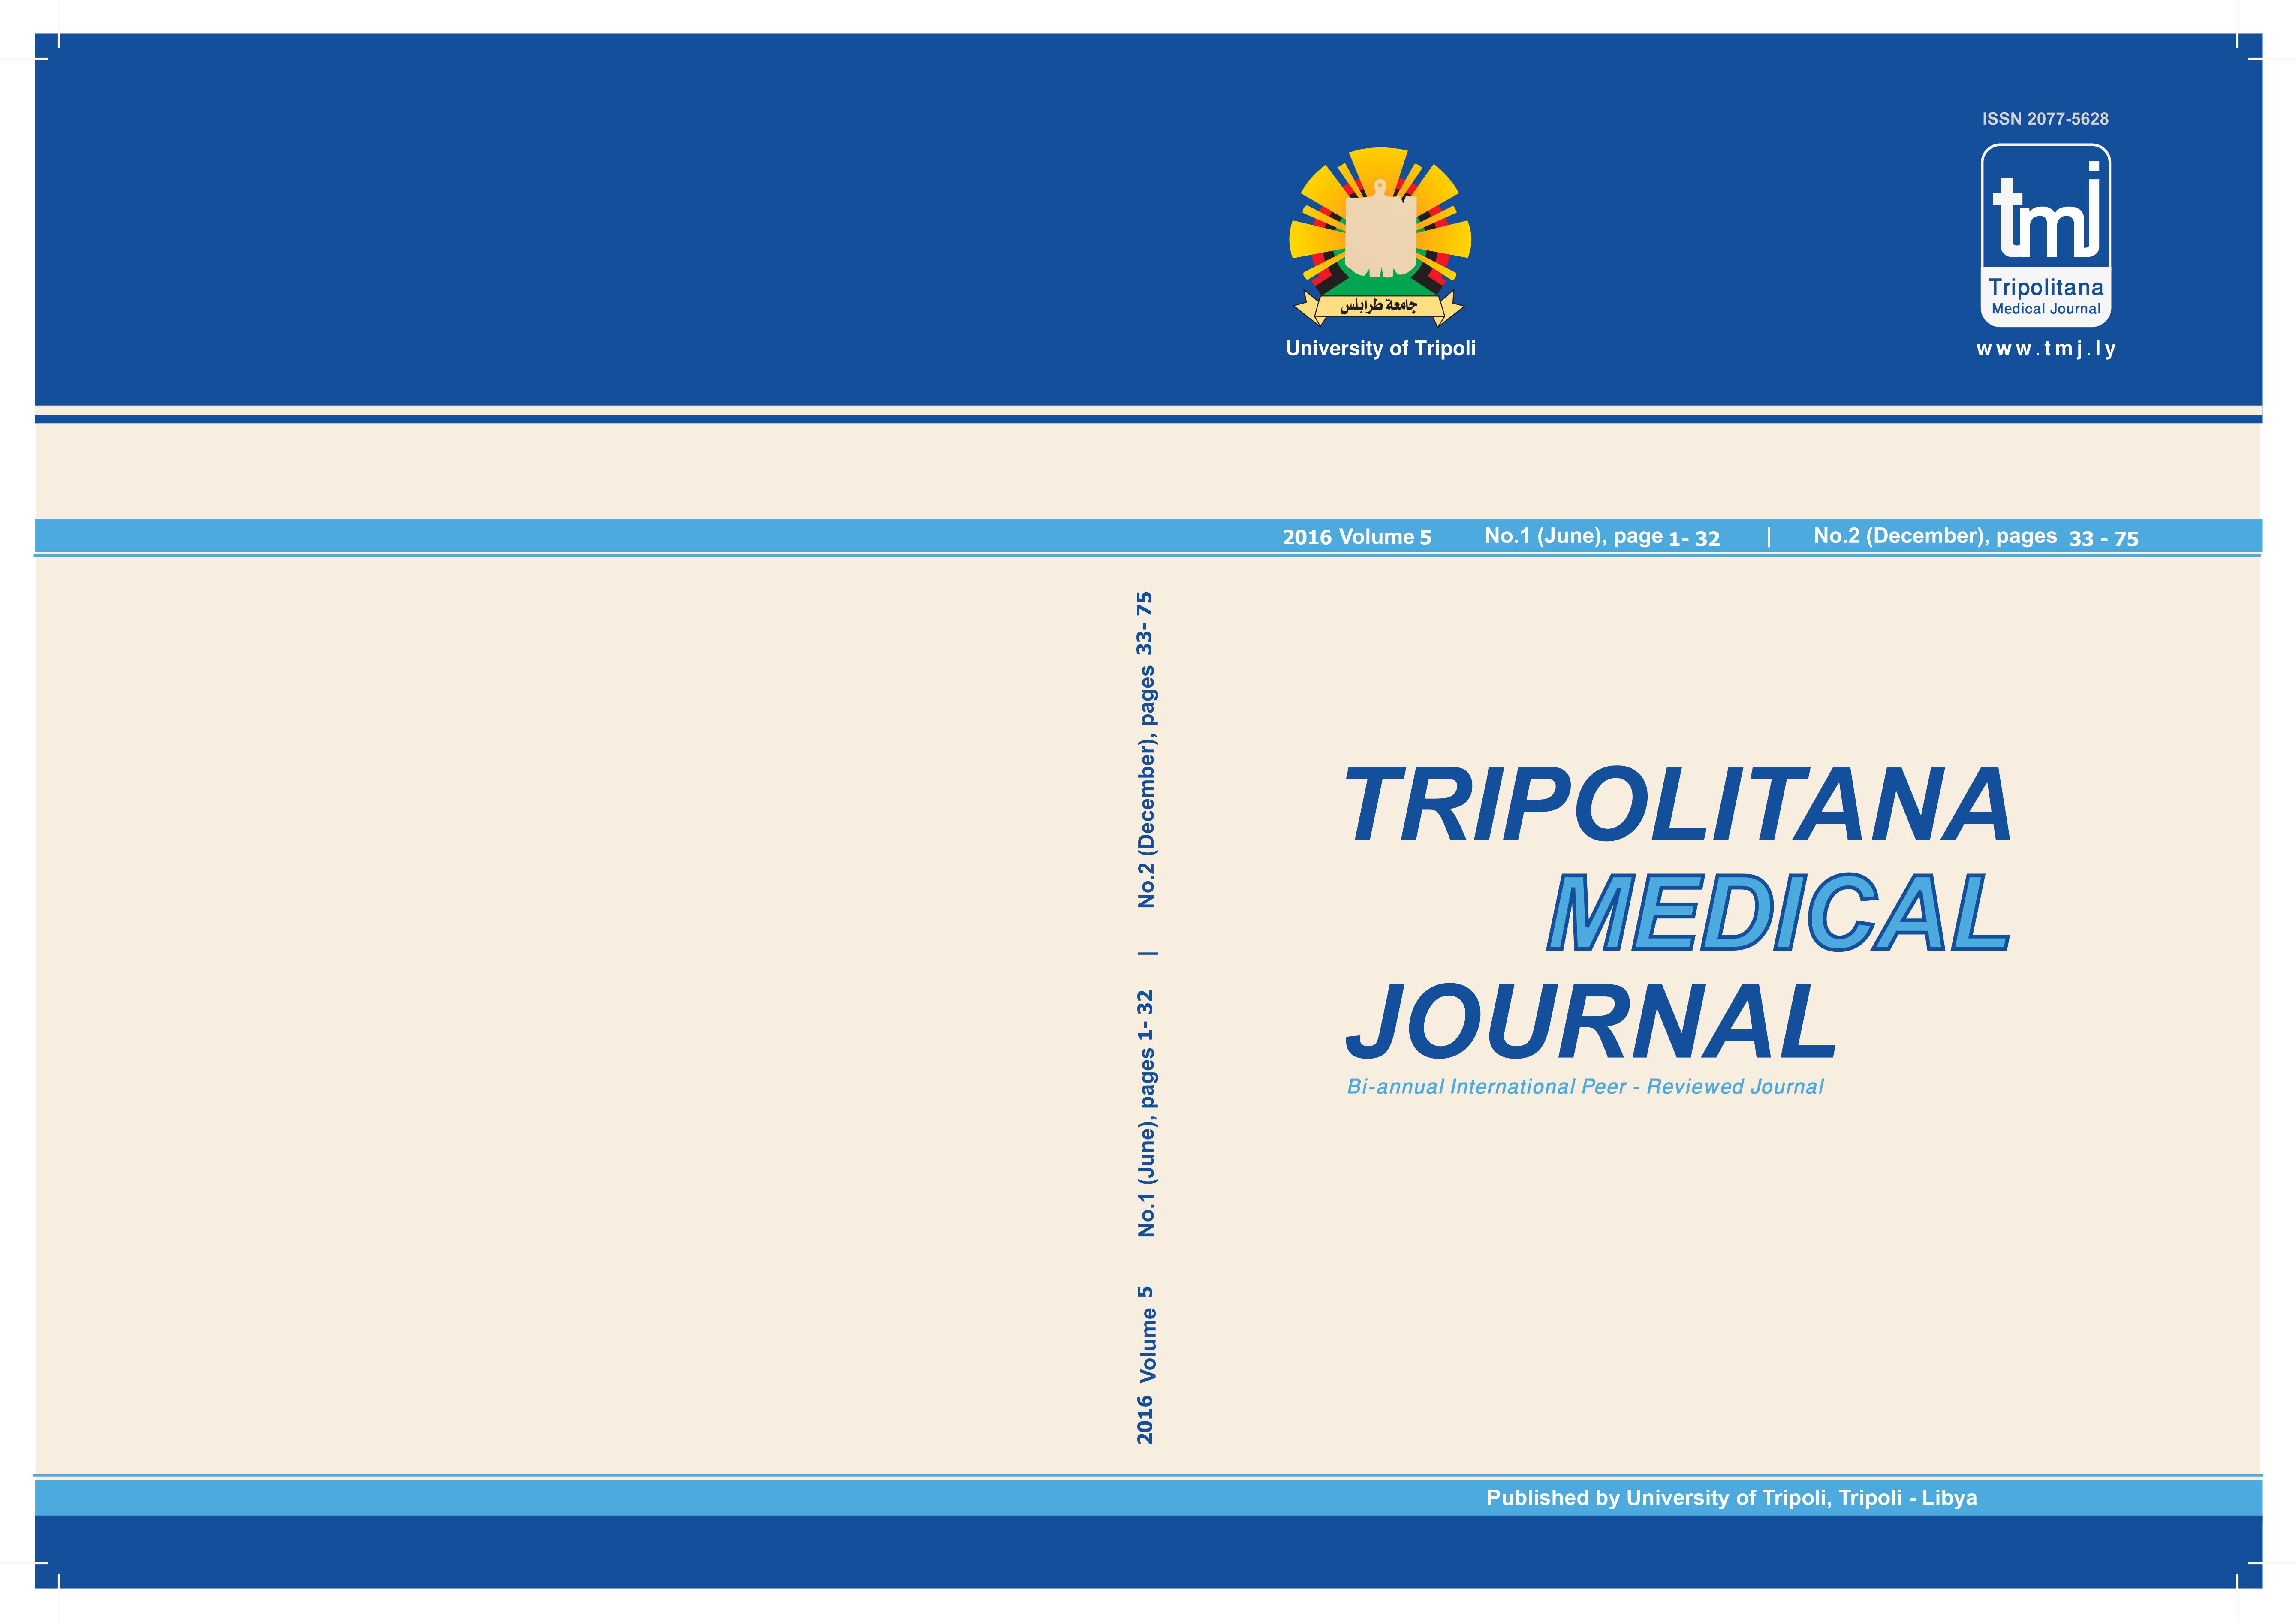 					View Vol. 5 No. 2 (2016): Tripolitana Medical Journal
				